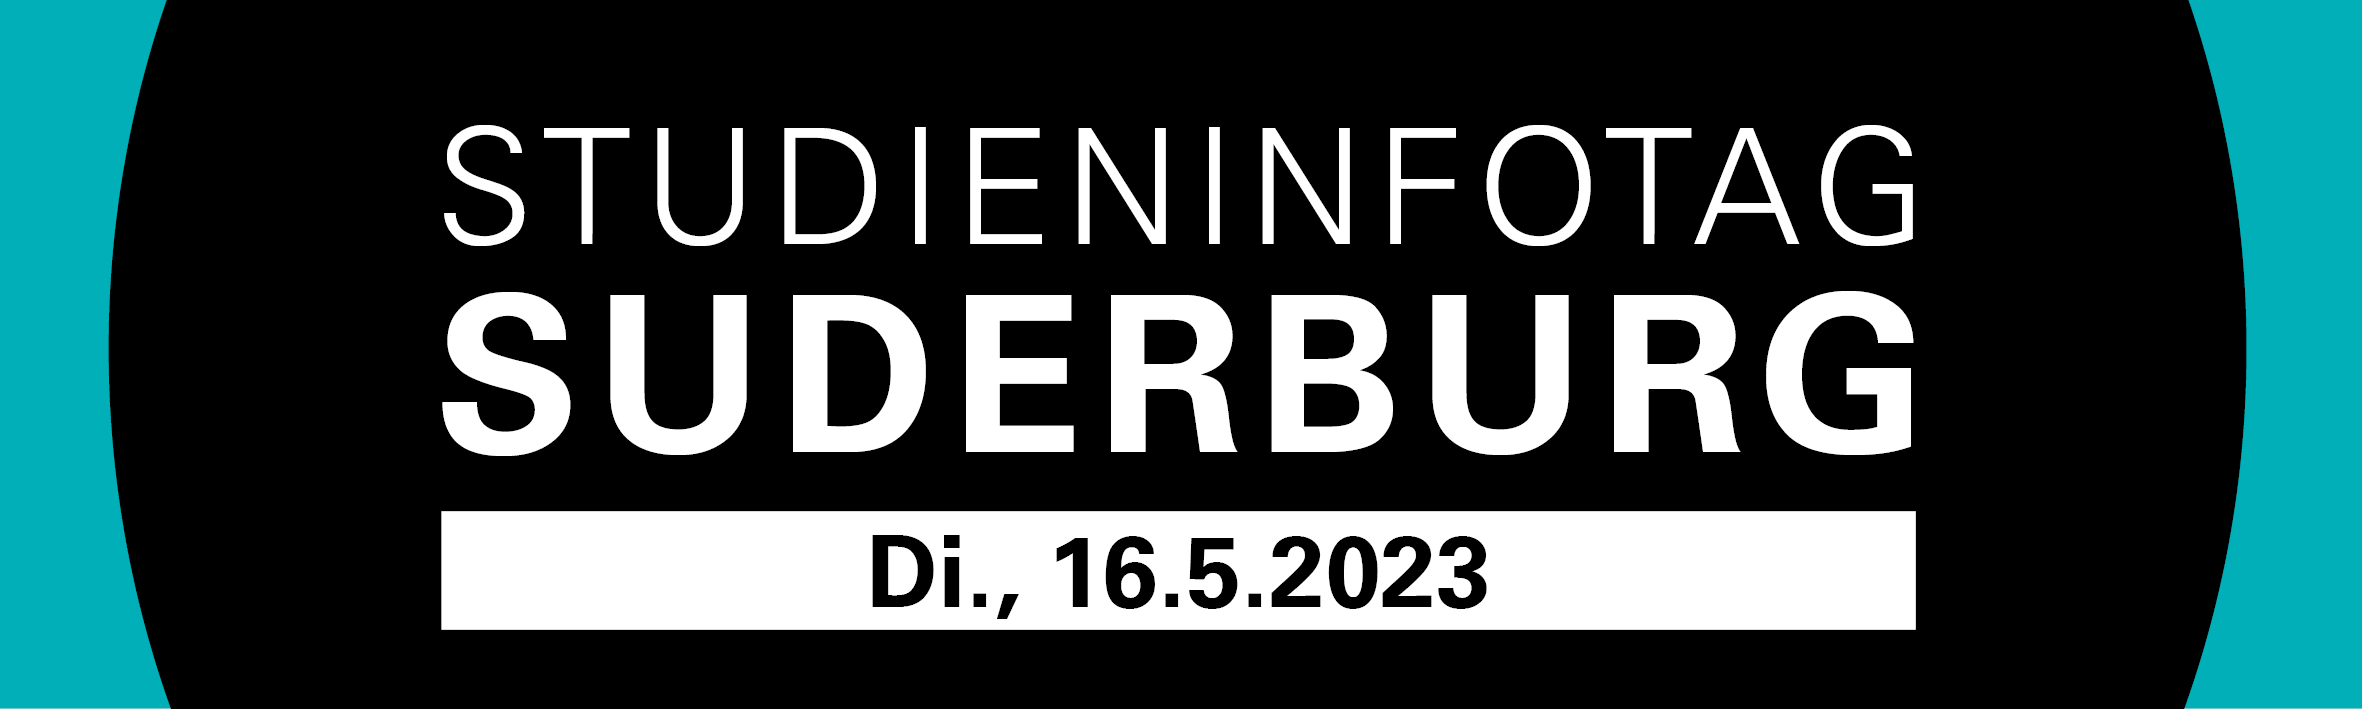 Studieninfotag Suderburg 2023